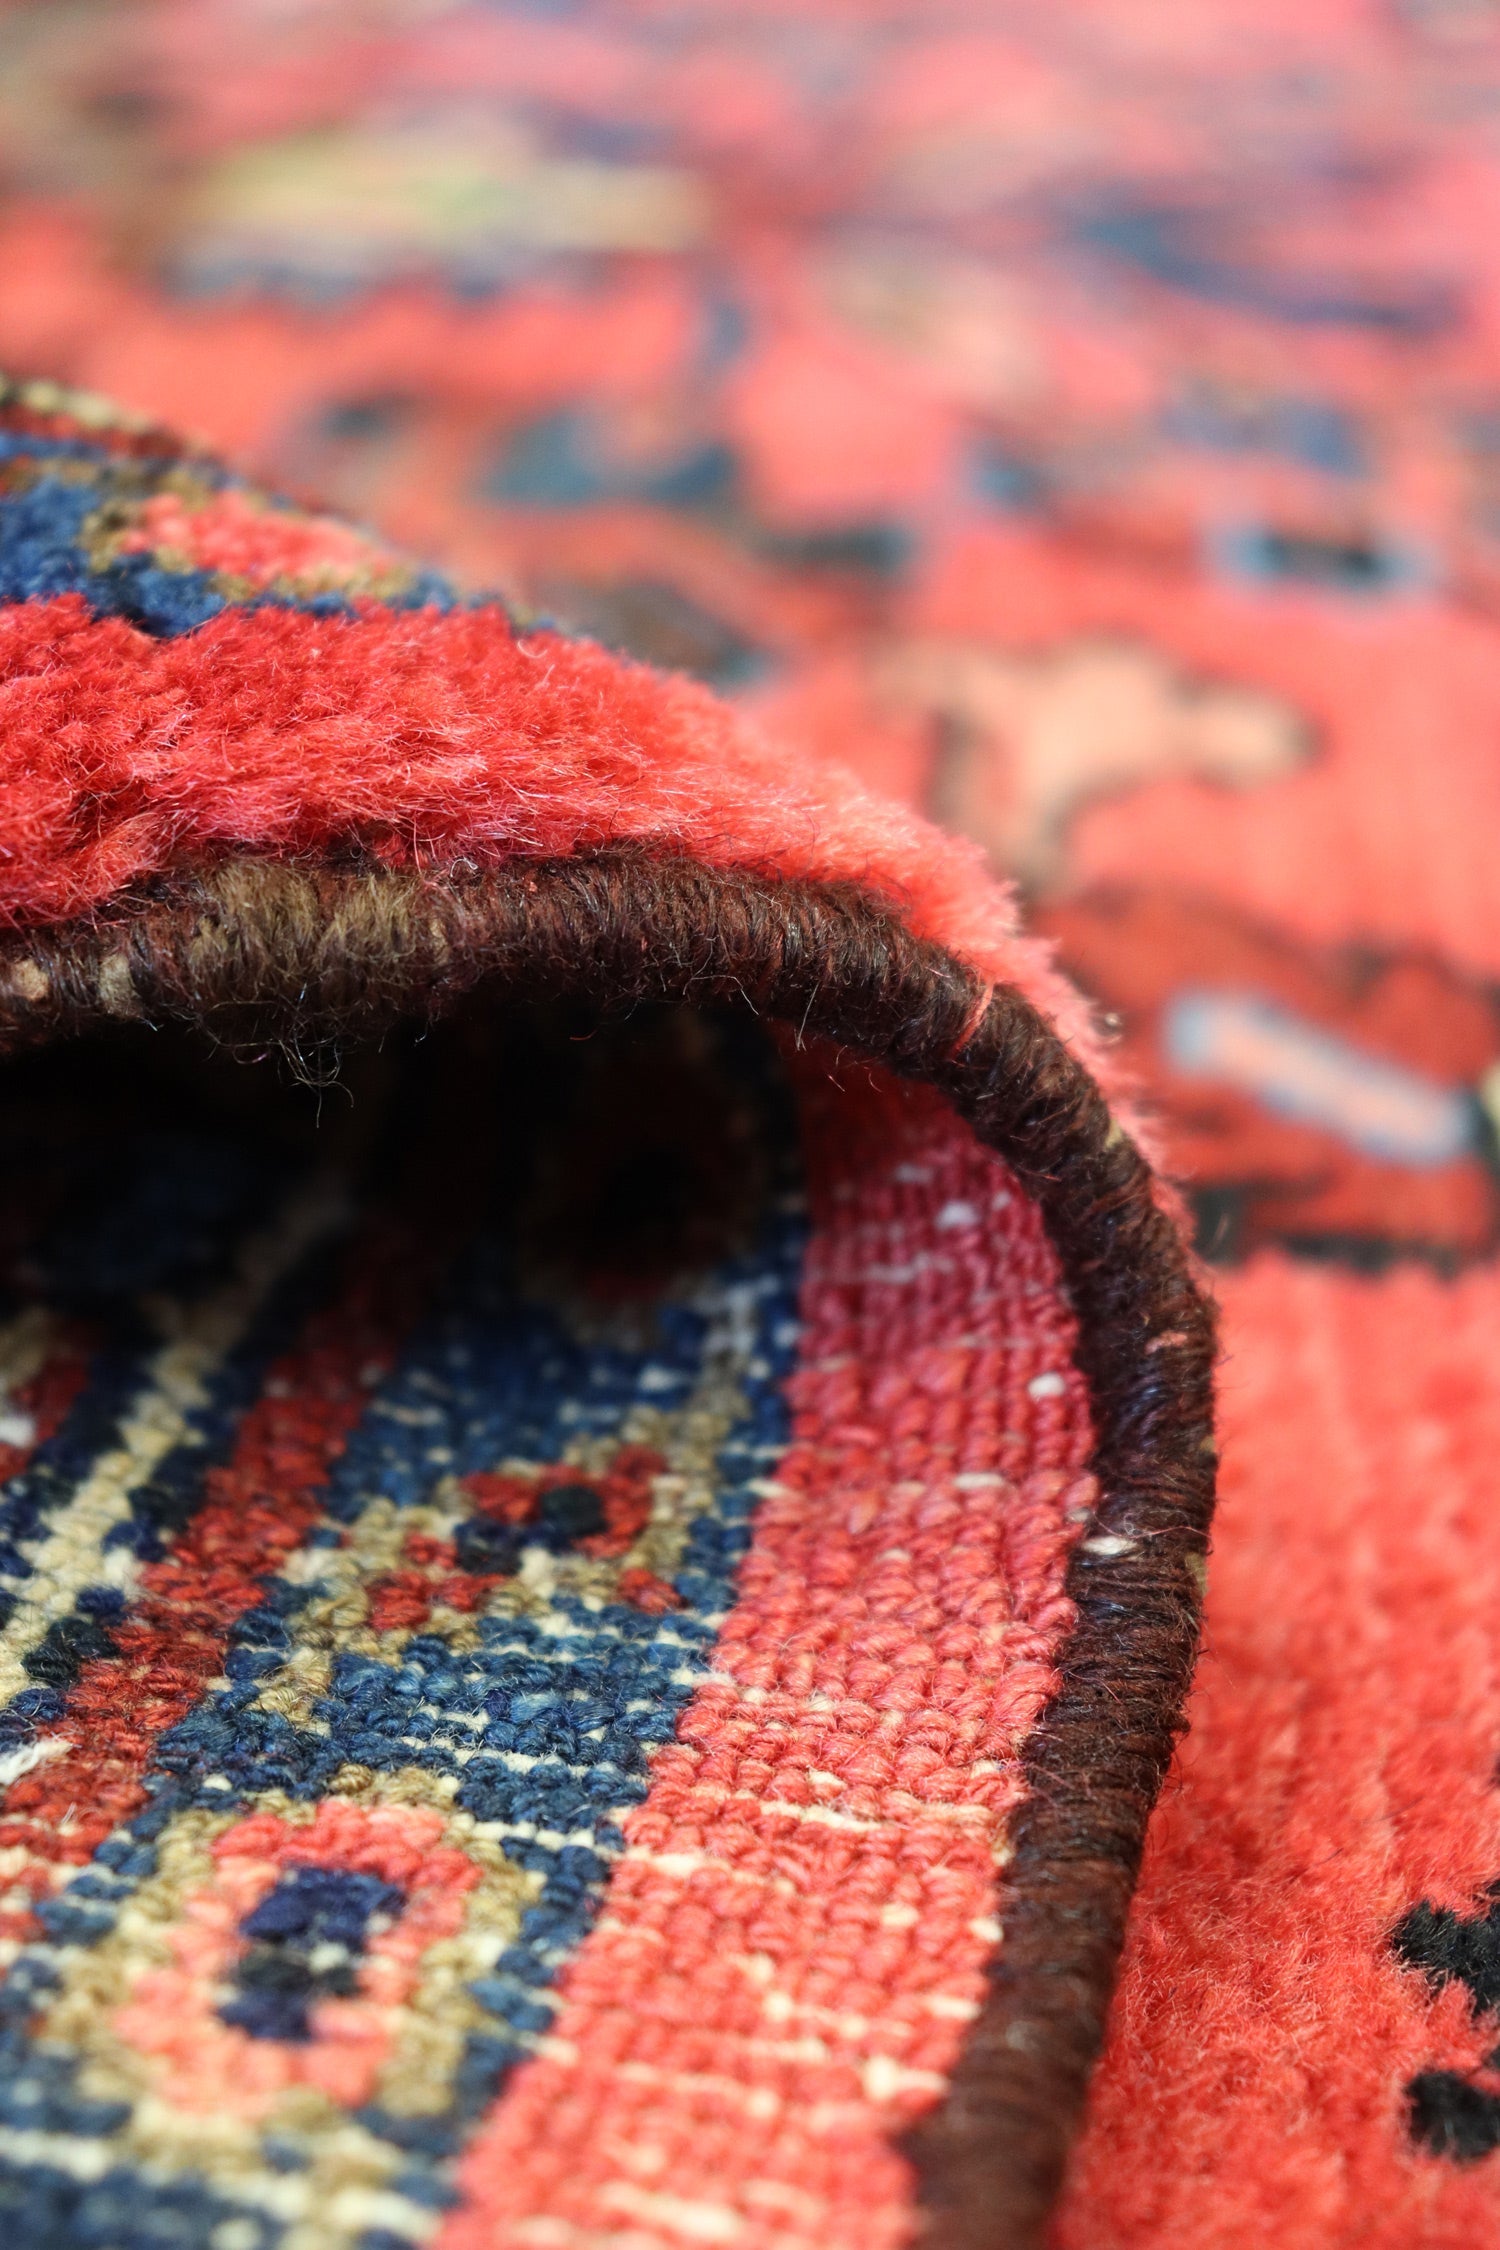 Antique Mehriban Handwoven Traditional Rug, J66272